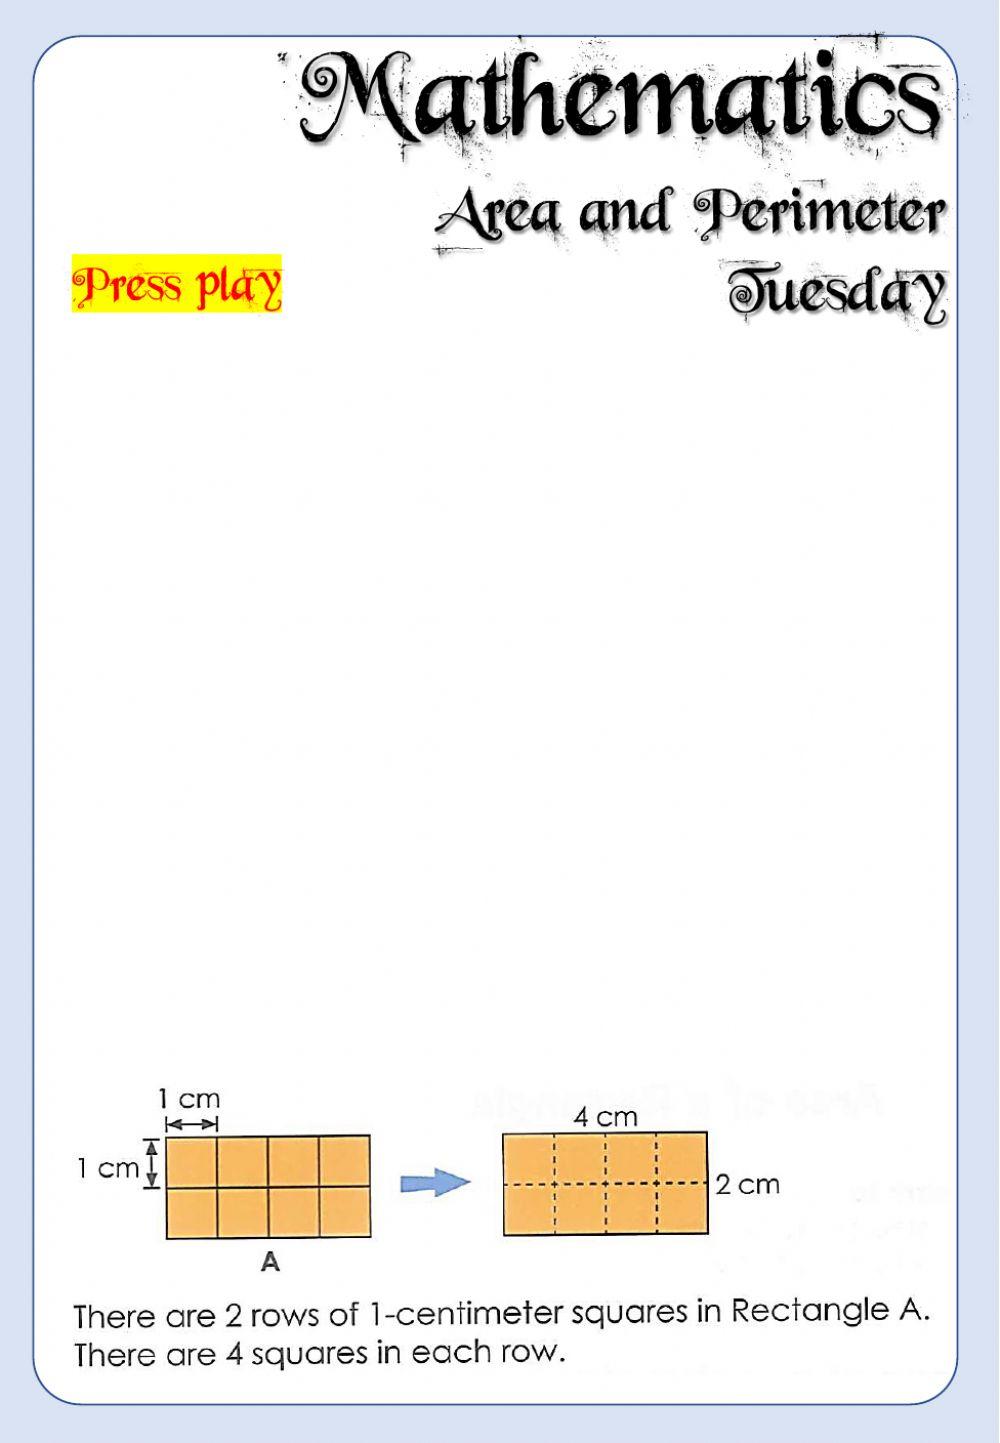 Week 20 - Tuesday - Math 6